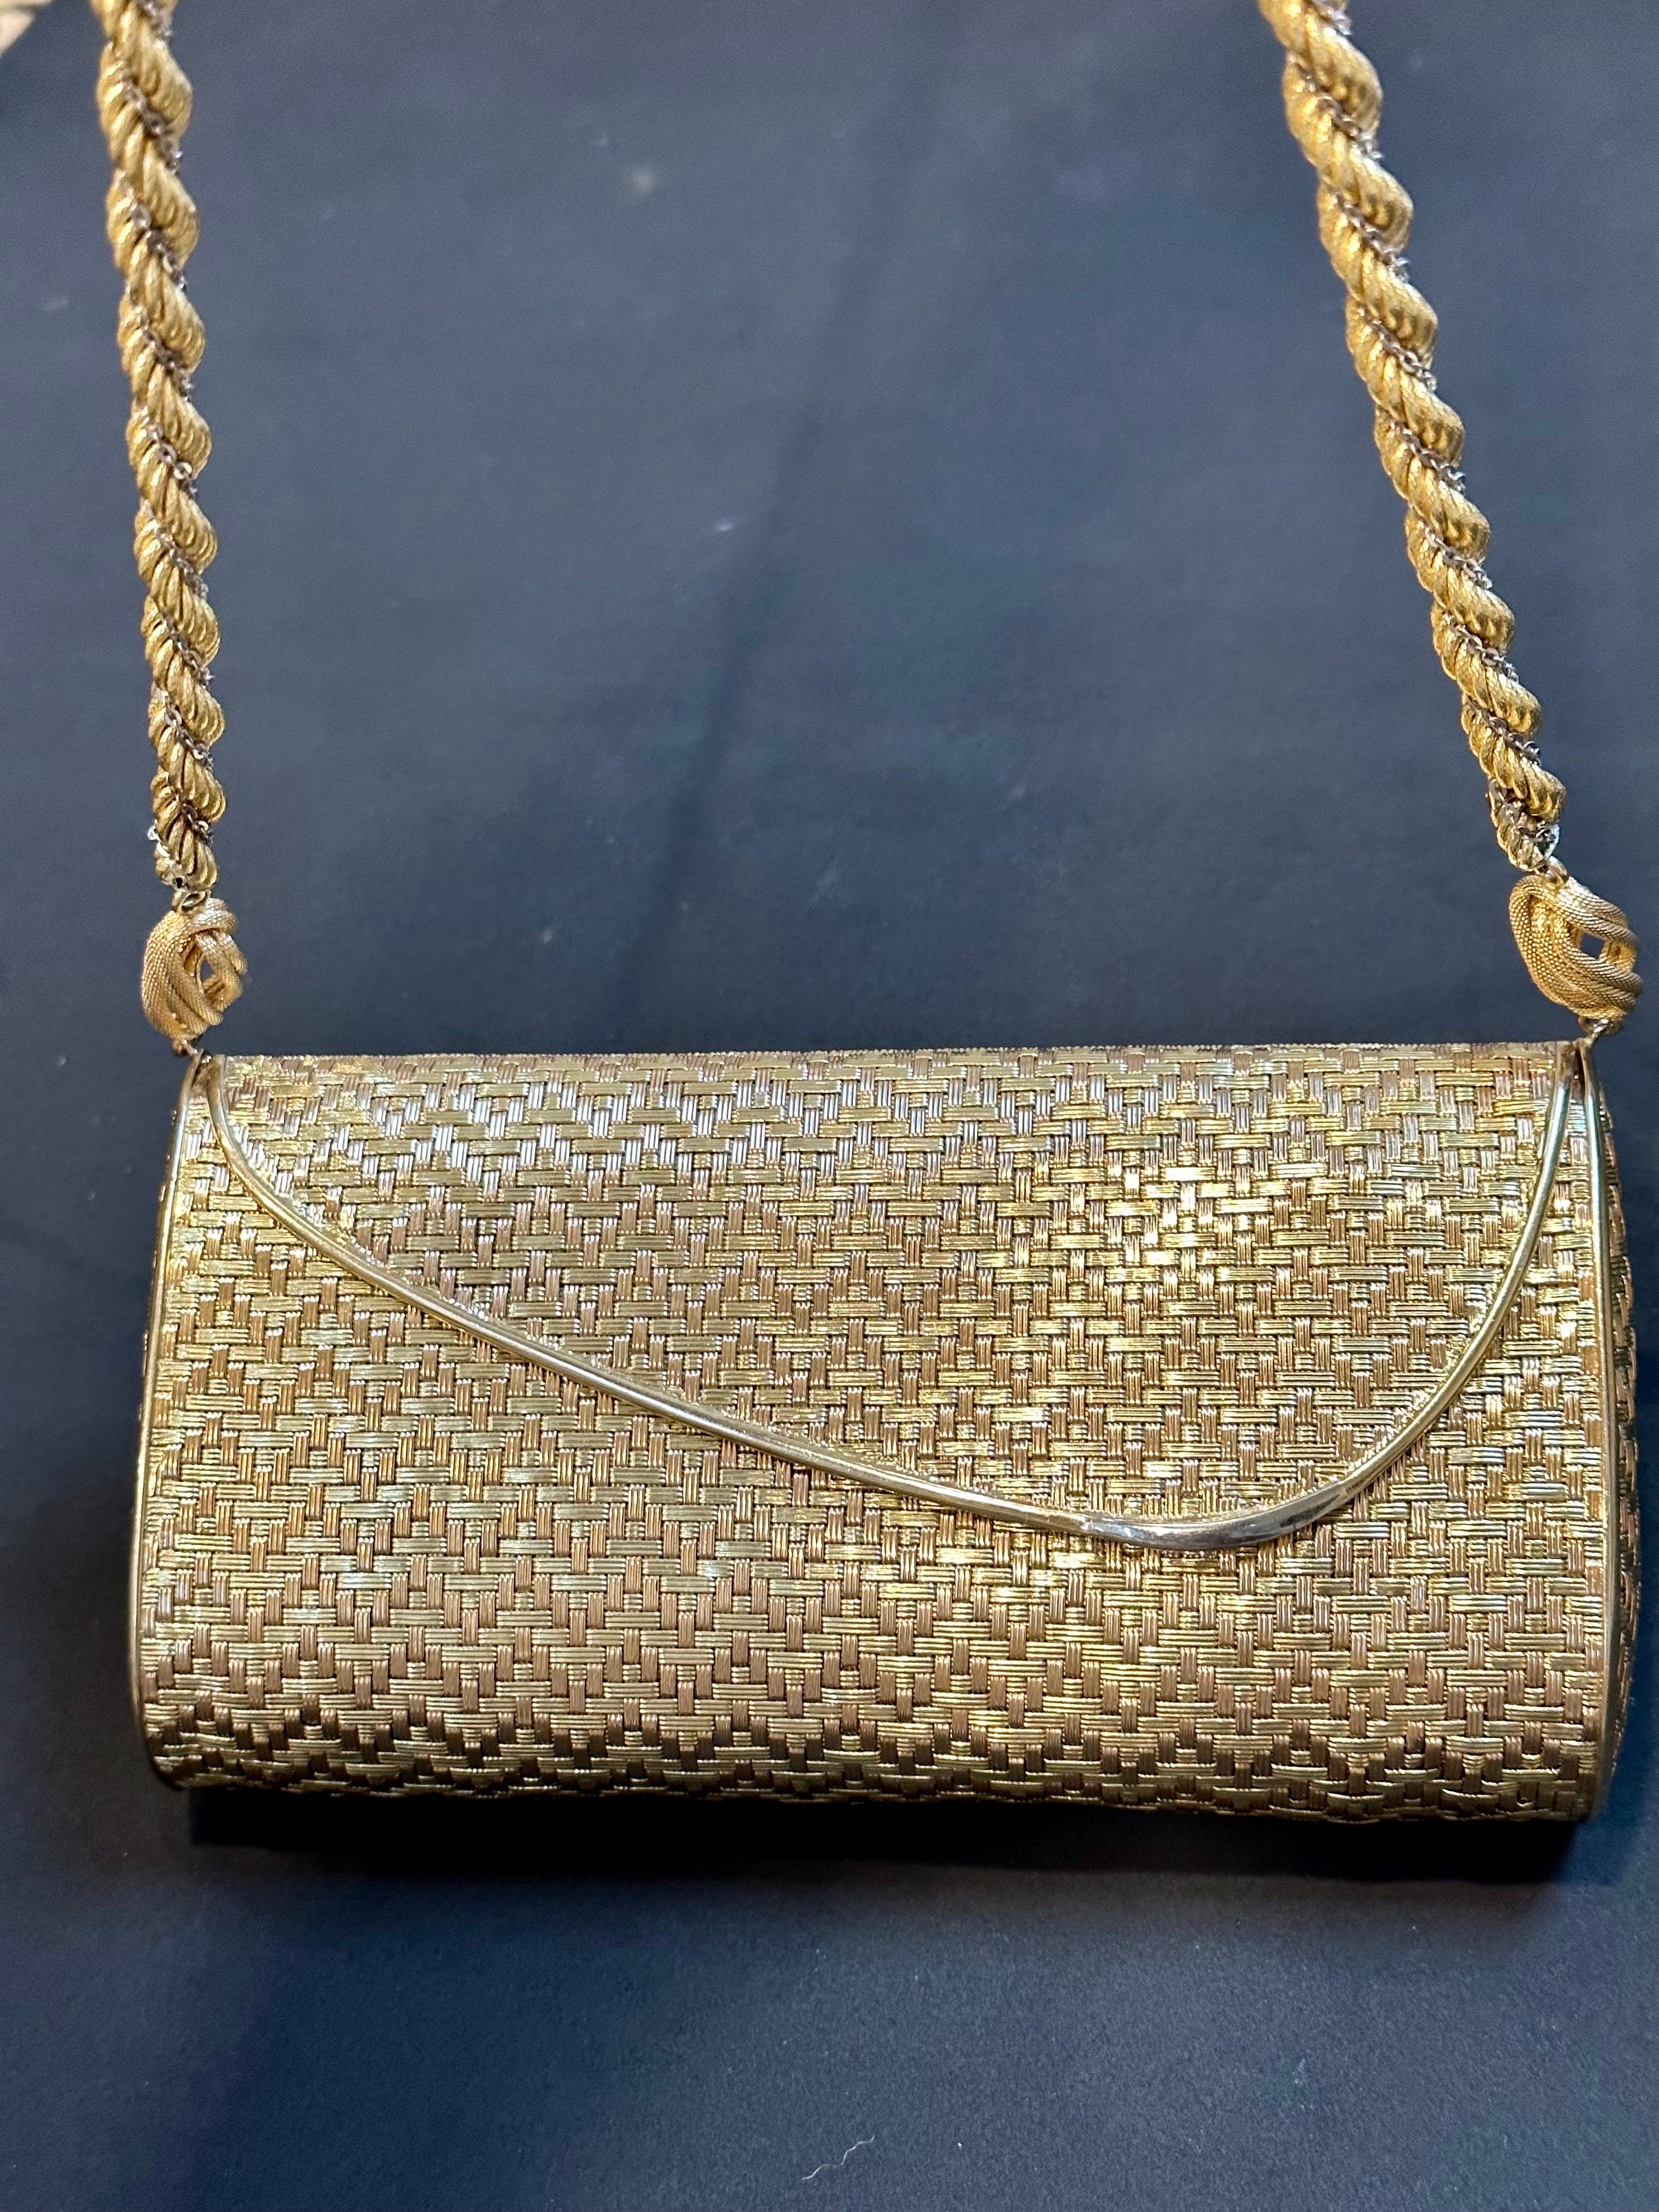 Cartier 18k Yellow Gold Mesh Purse Handbag with Shoulder Chain Rare 401 Gm 4